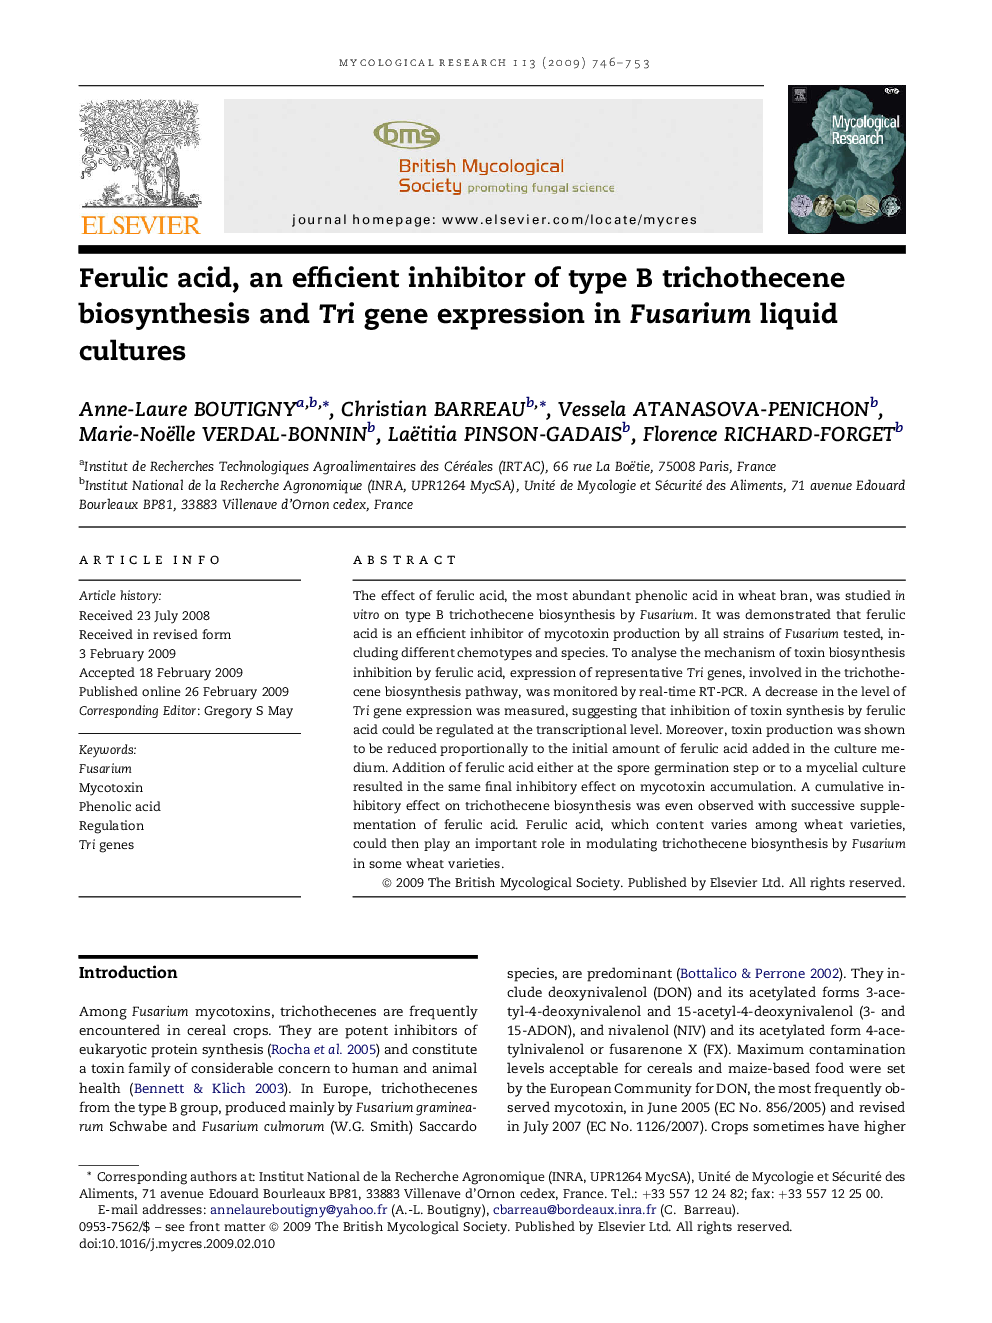 Ferulic acid, an efficient inhibitor of type B trichothecene biosynthesis and Tri gene expression in Fusarium liquid cultures